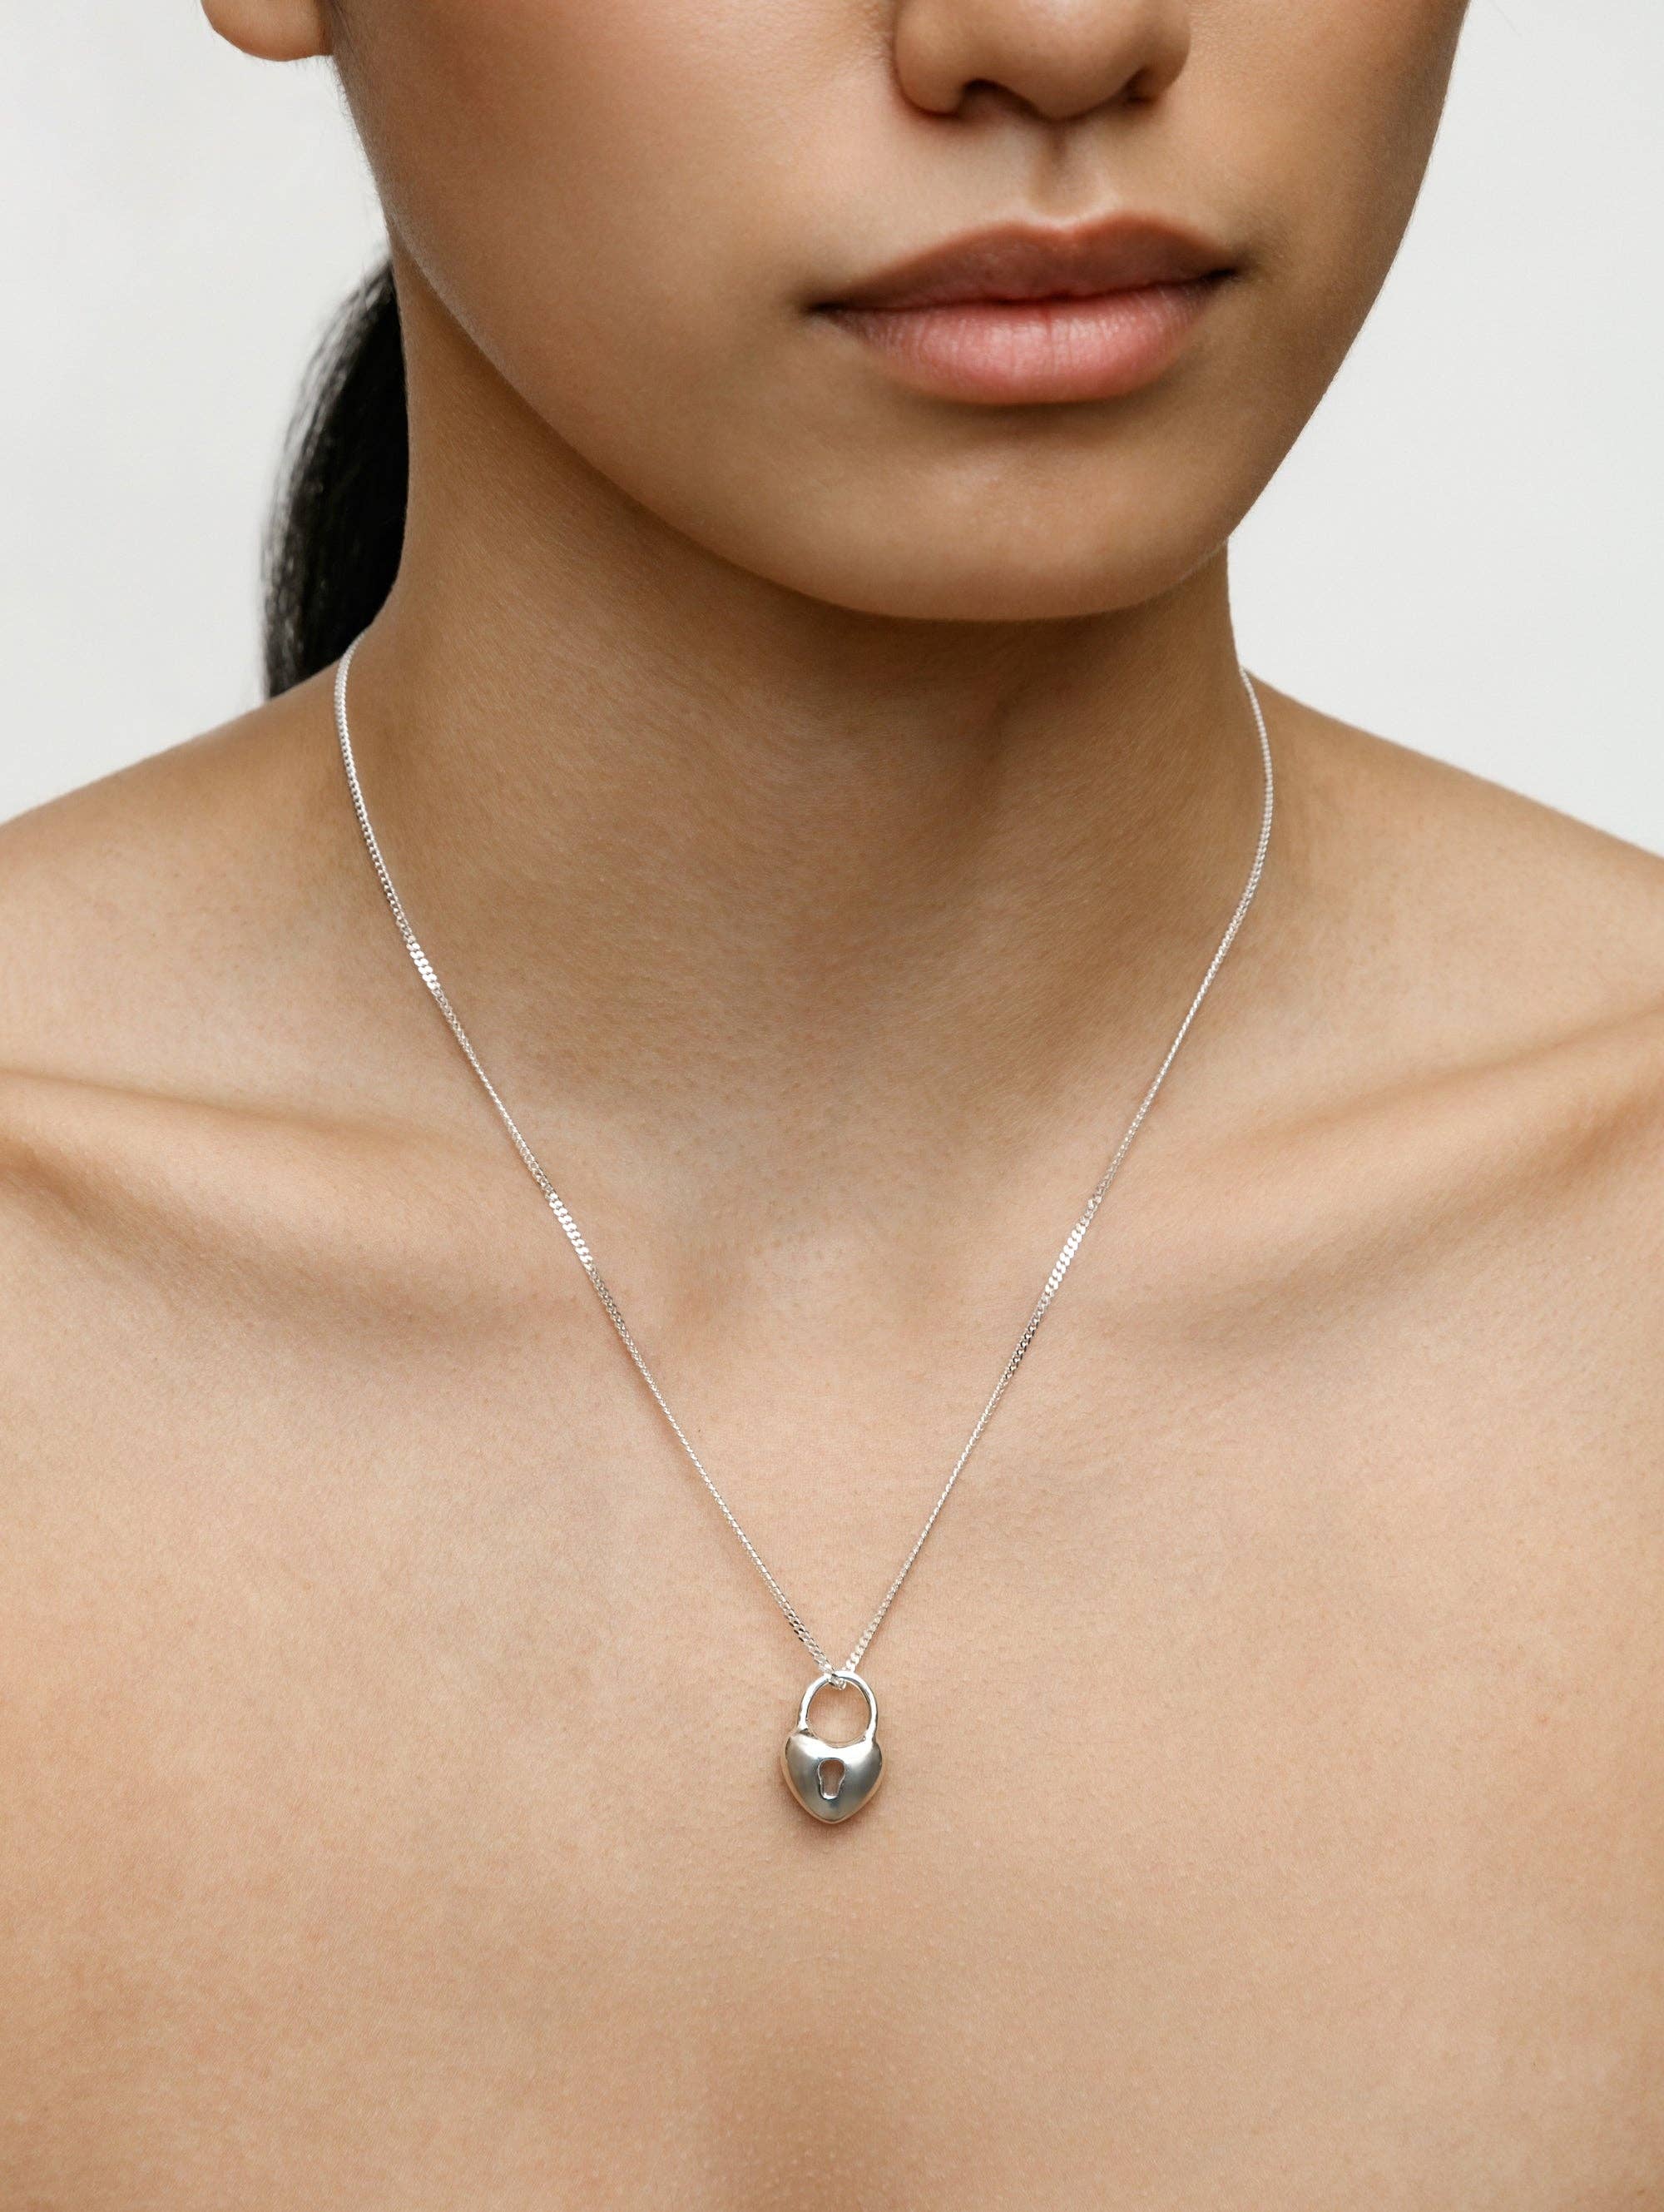 Heart Locket Necklace, Sterling Silver